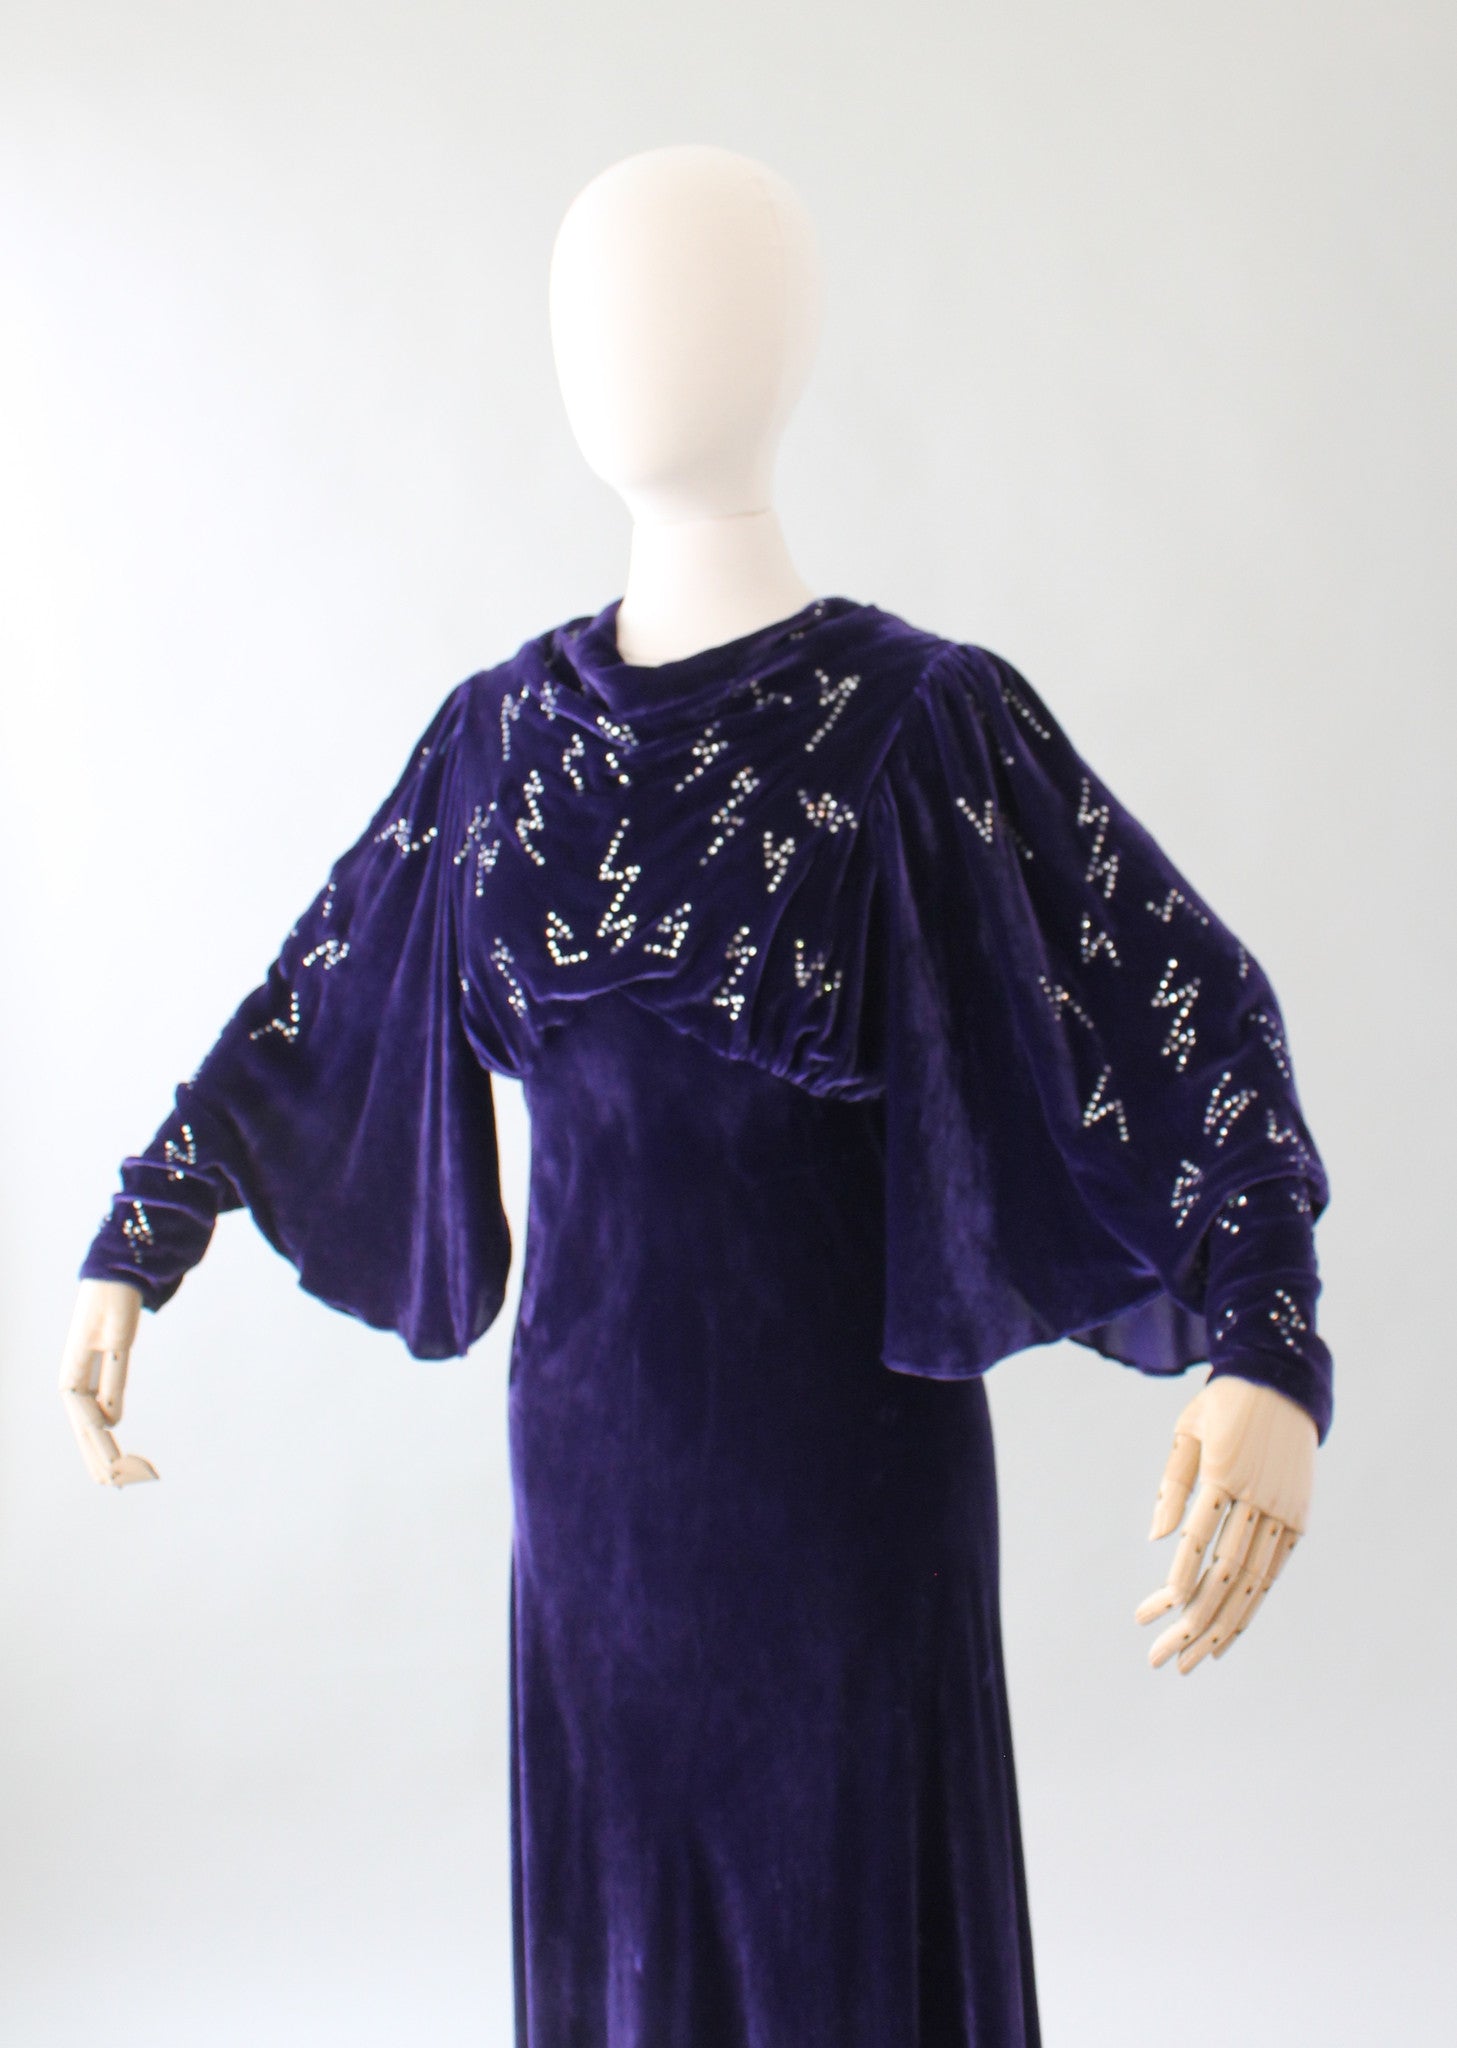 violet evening gown